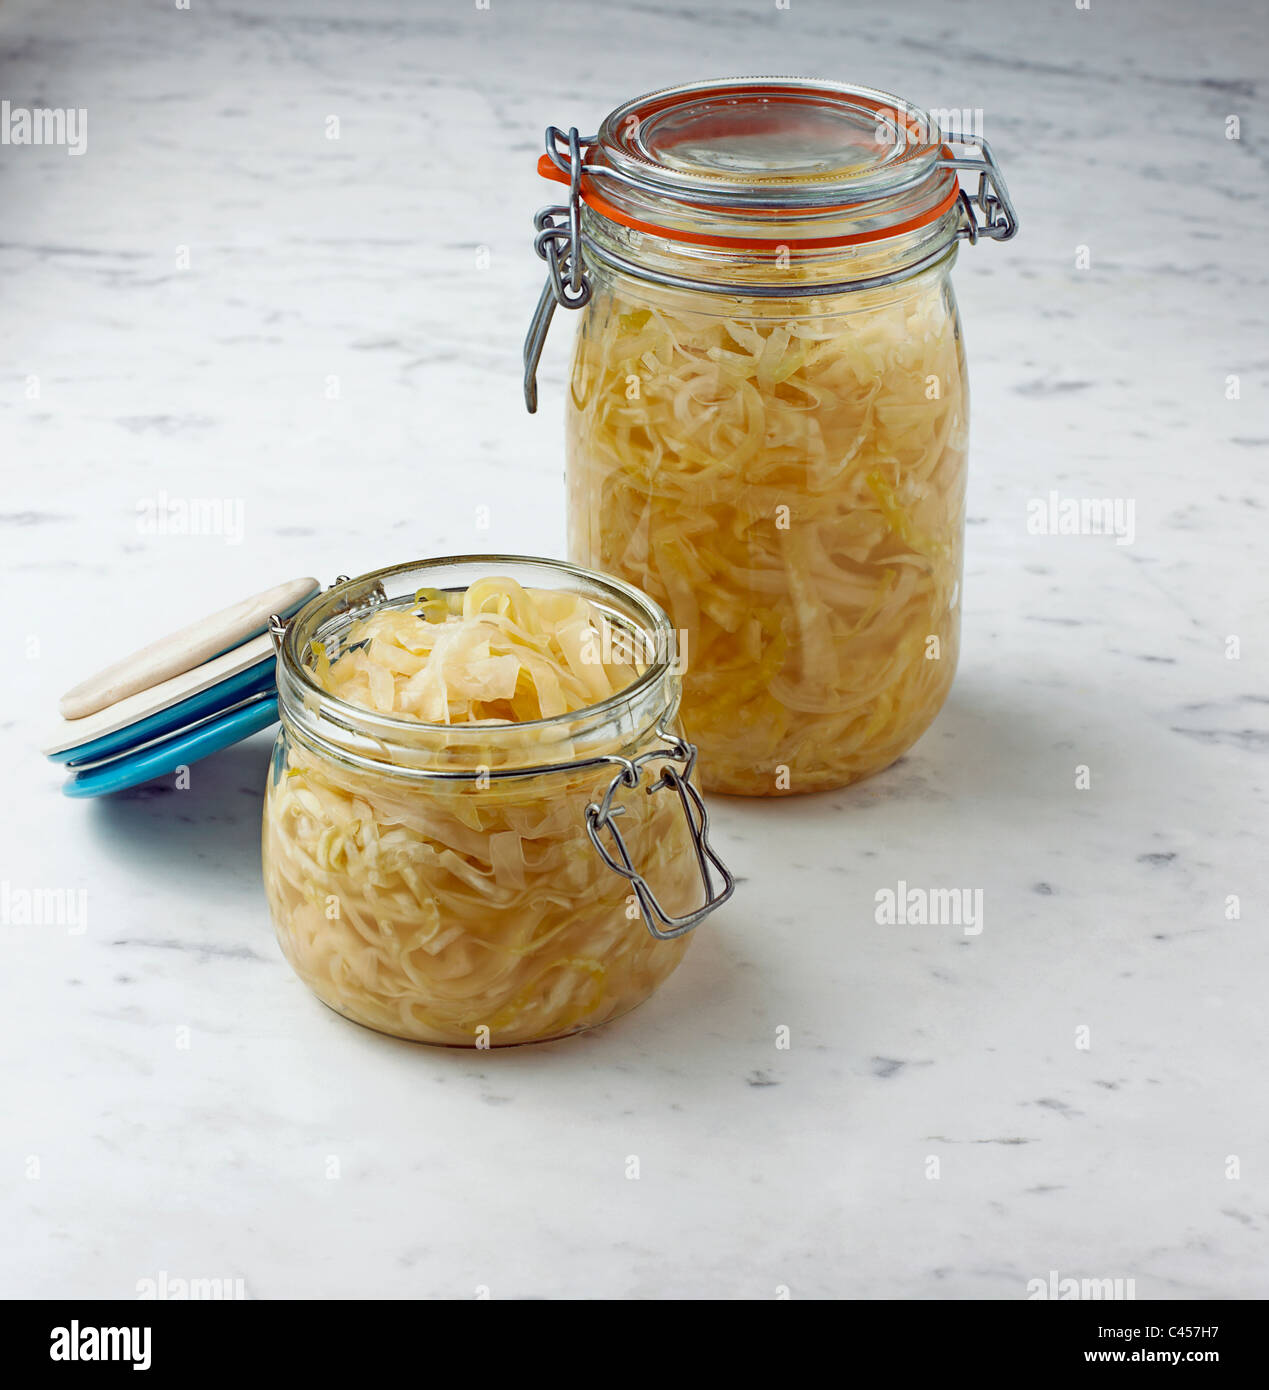 Sauerkraut in jar, close-up Stock Photo